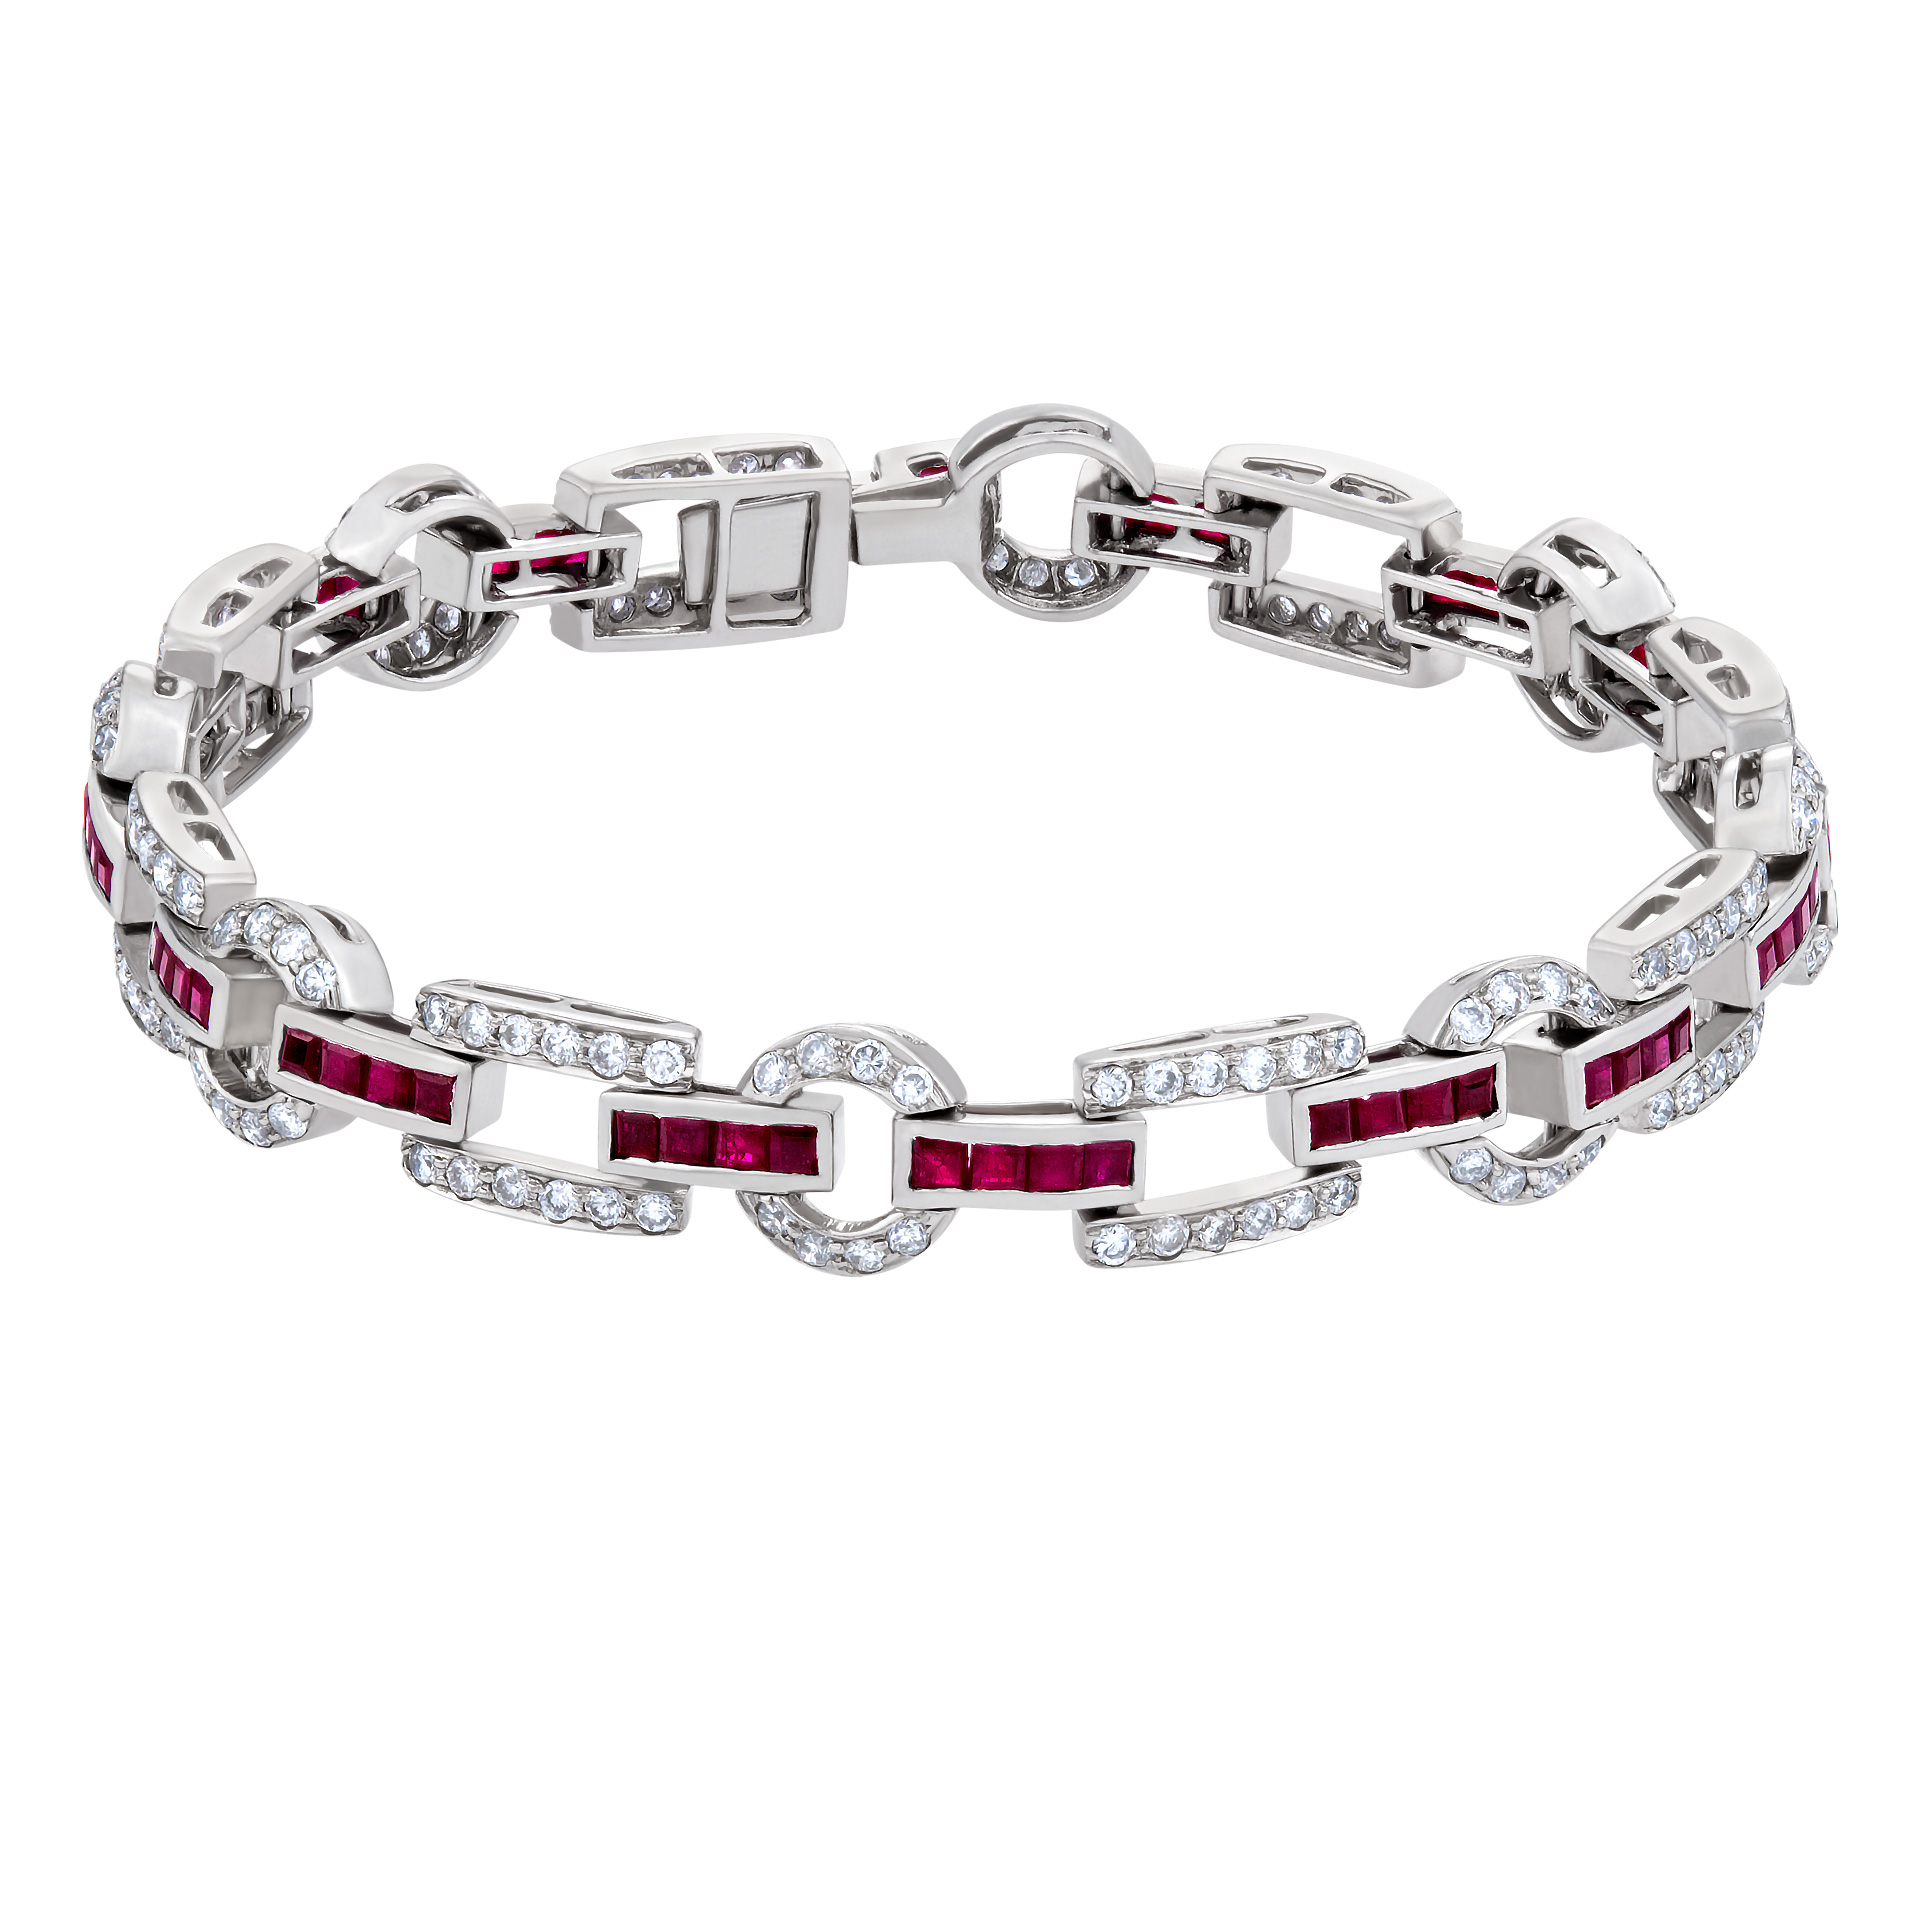 Ruby and diamond link bracelet set in 18k white gold